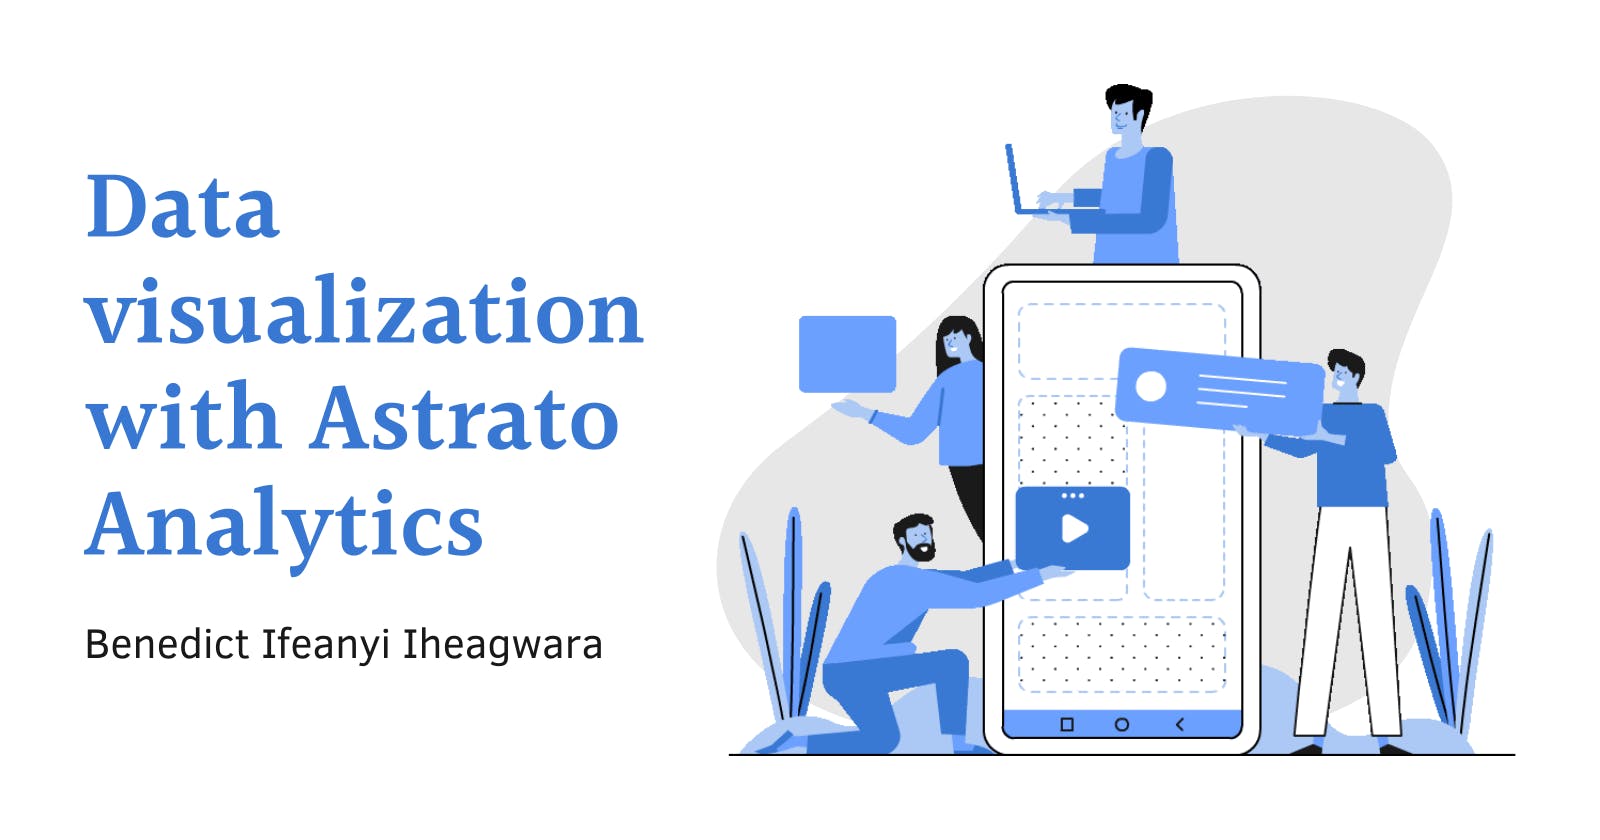 Data visualization with Astrato Analytics